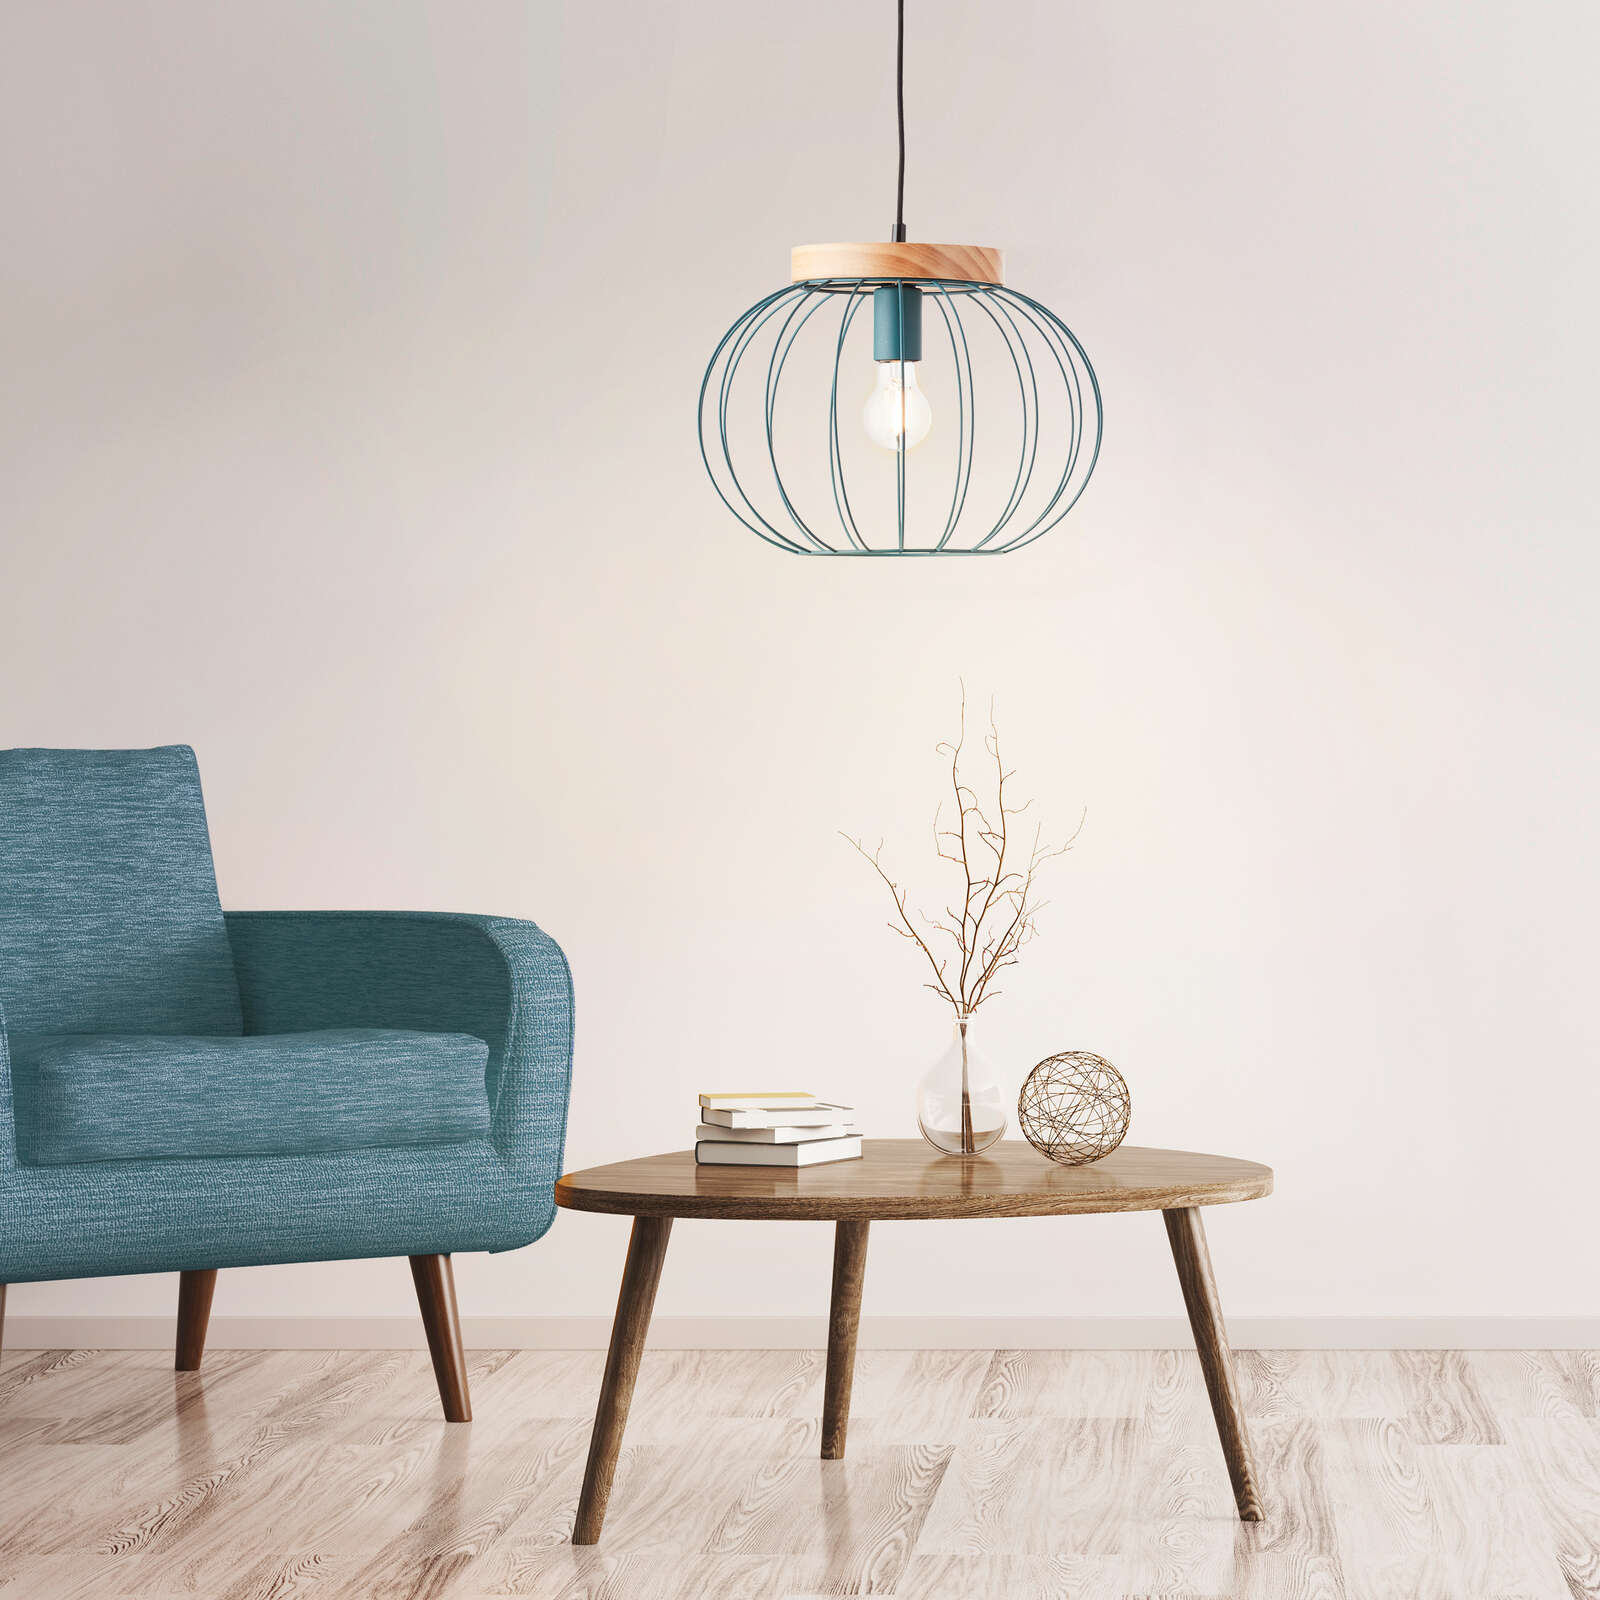             Houten hanglamp - Oliver 1 - Blauw
        